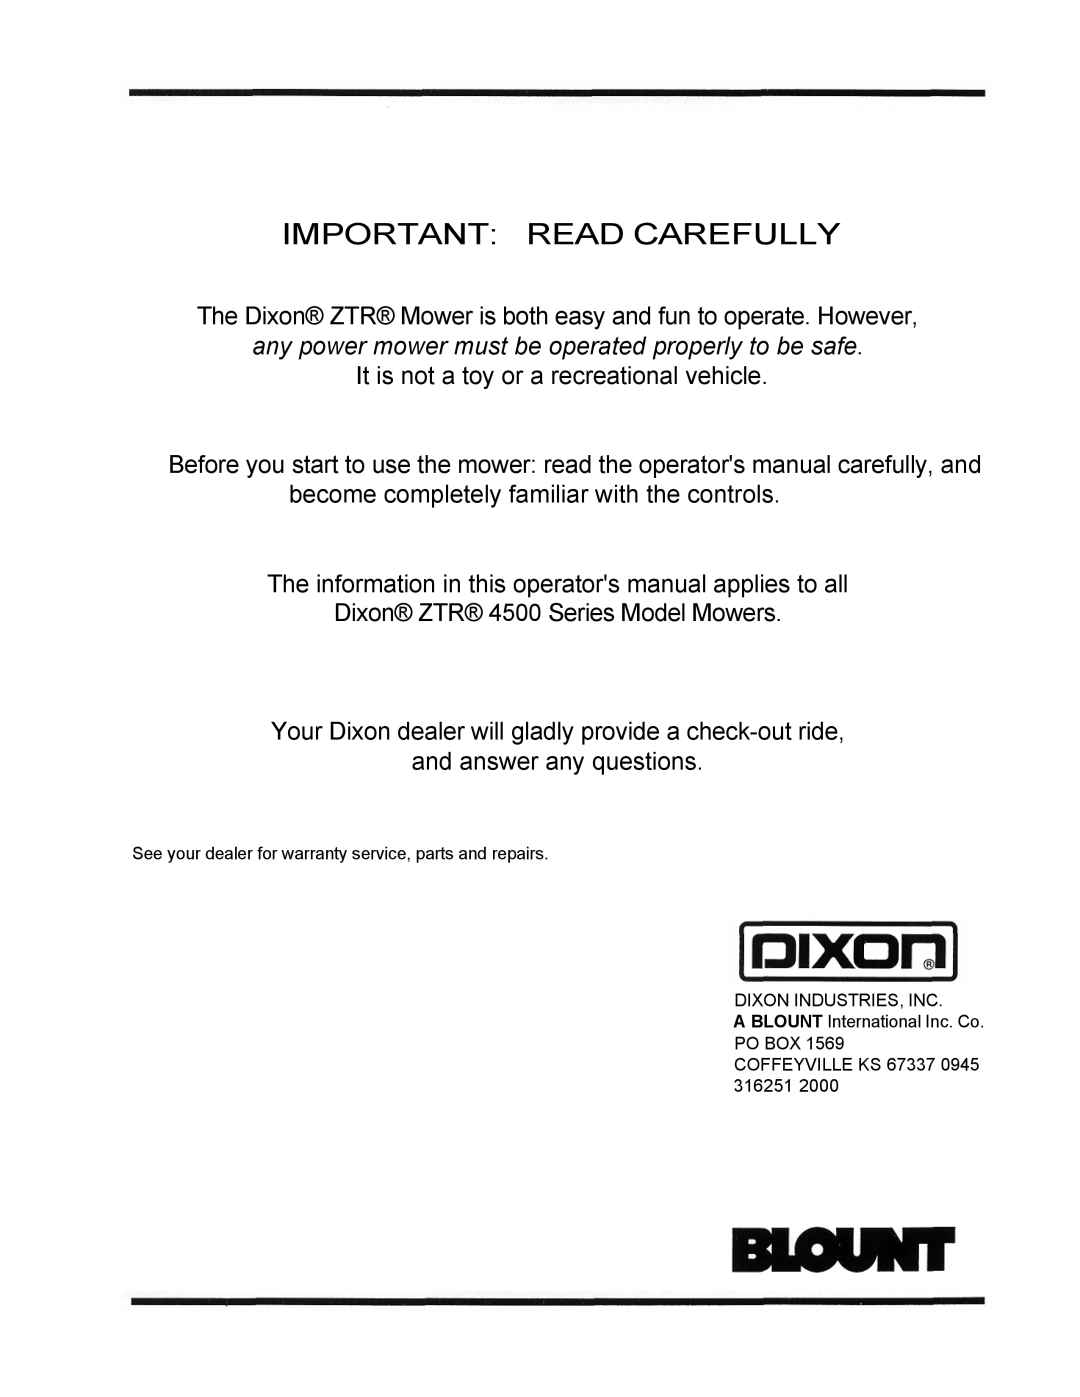 Dixon ZTR 4515K, 1998 manual Important Read Carefully 